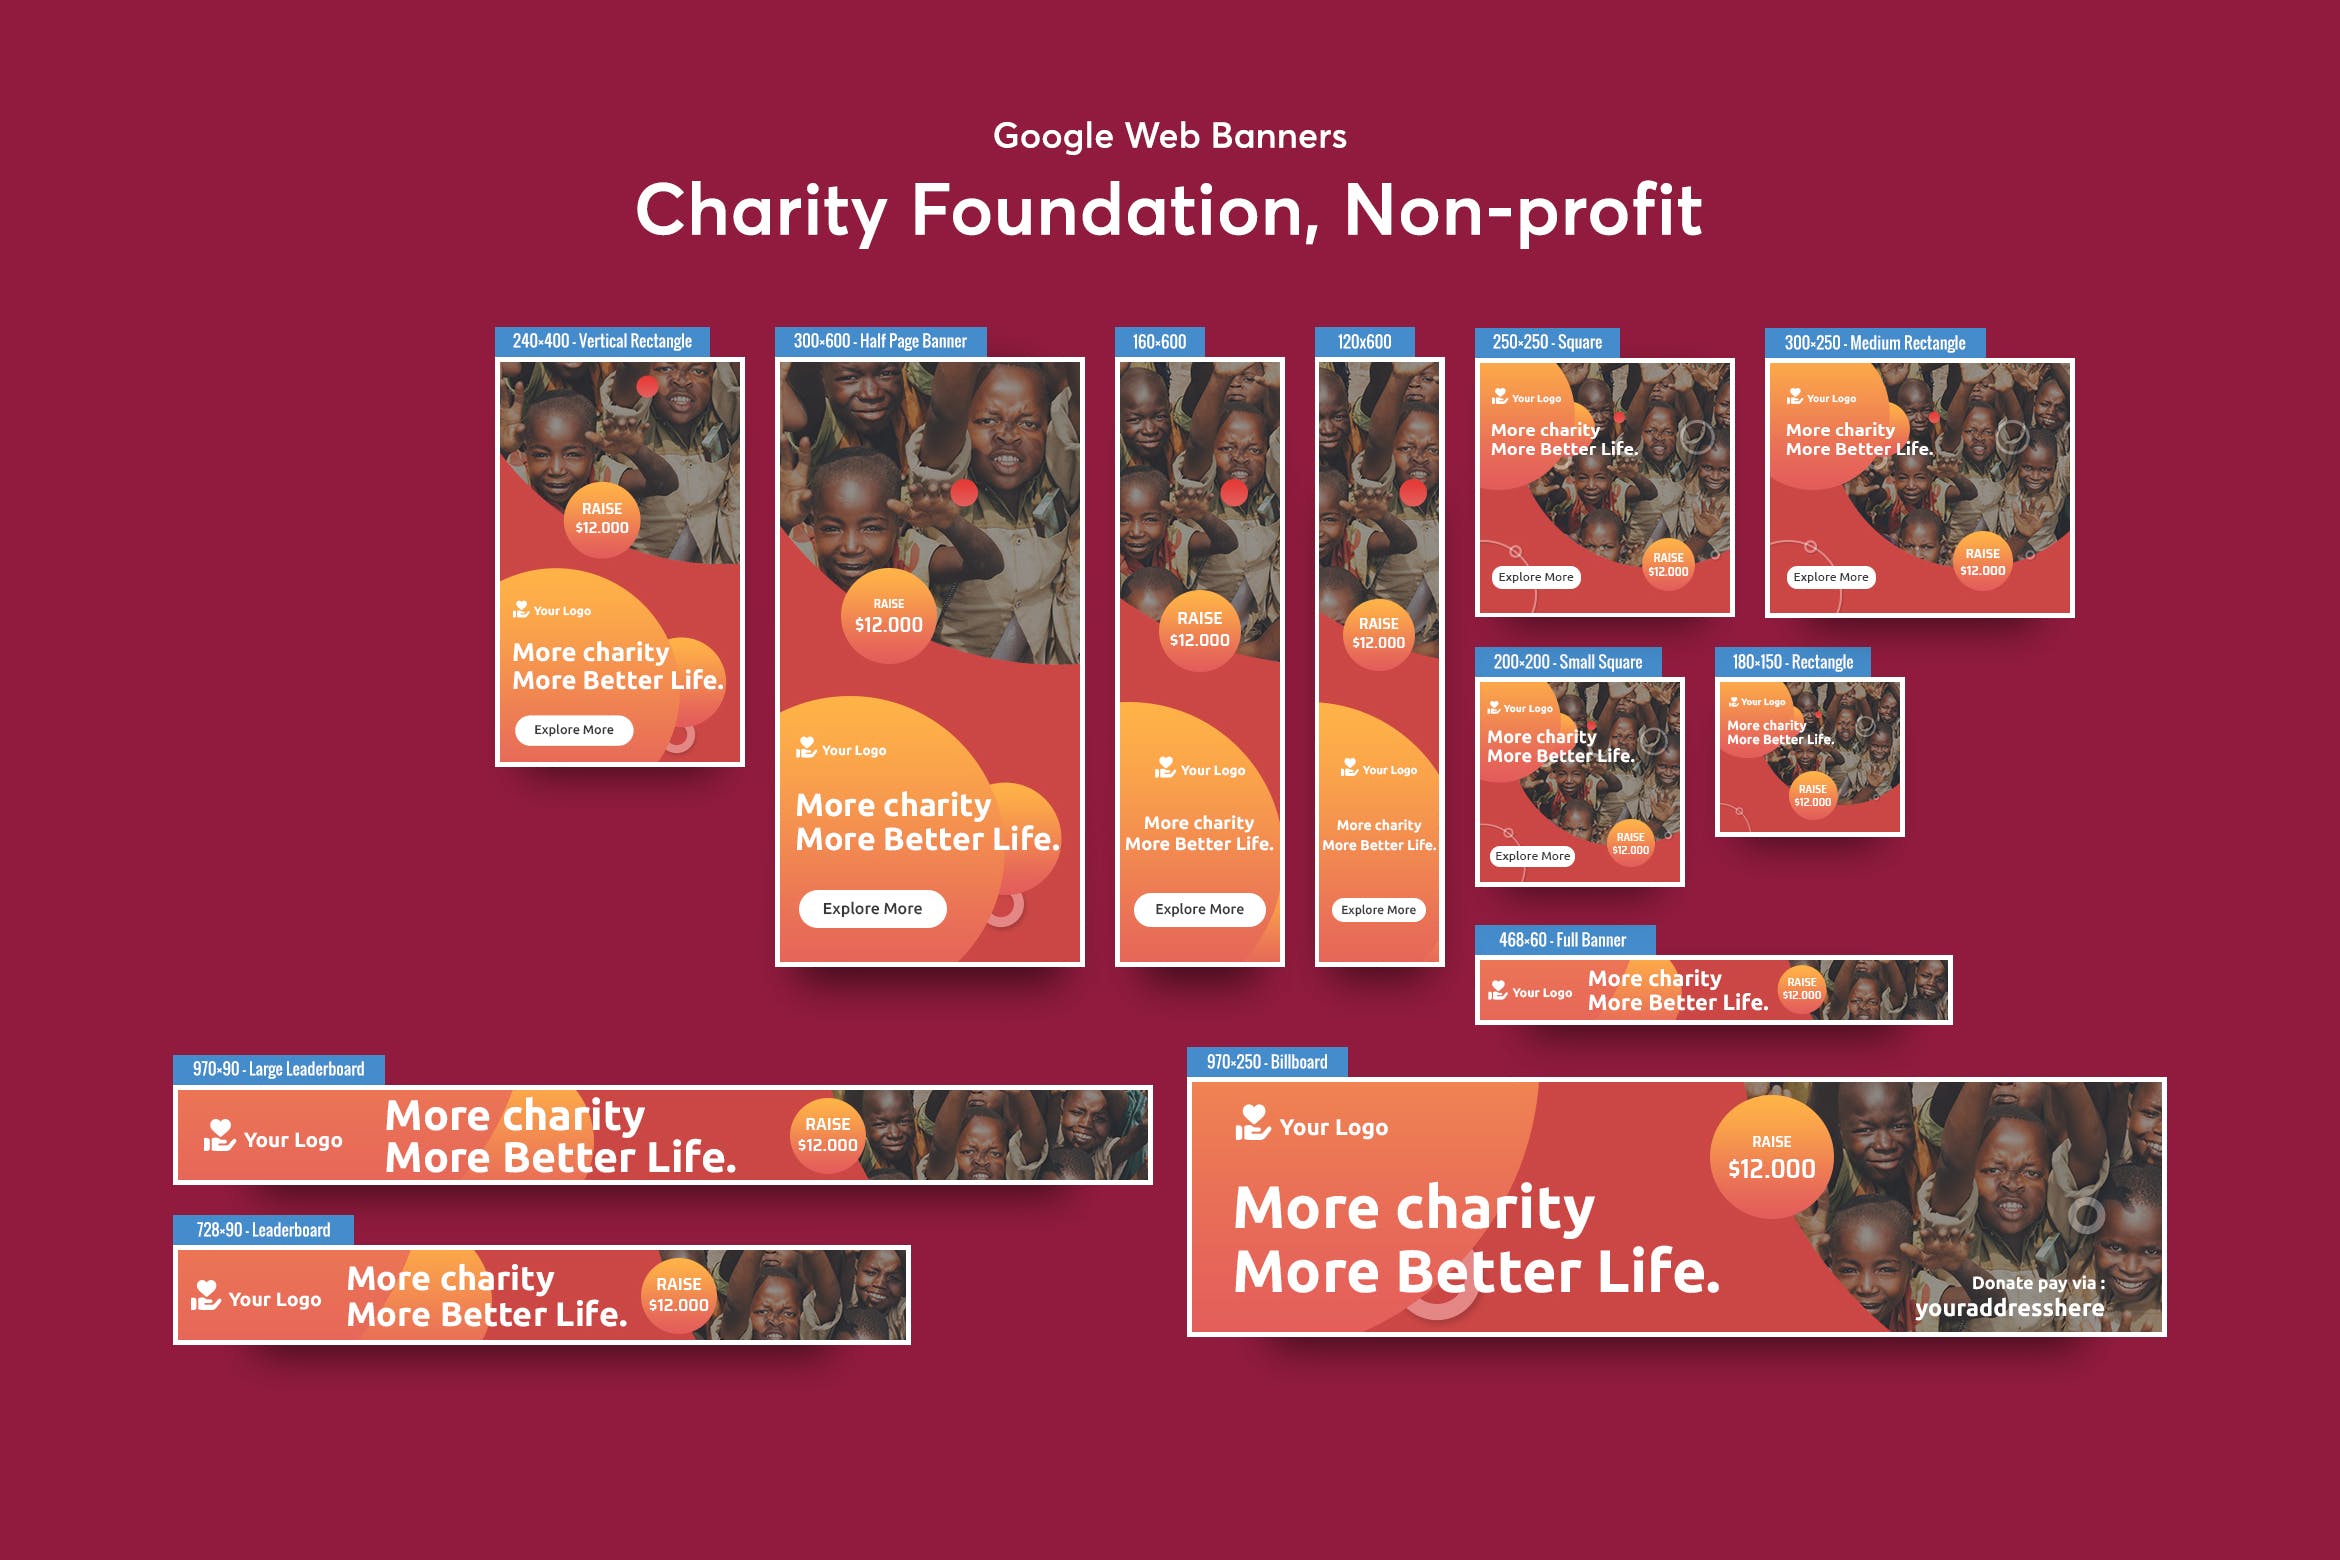 慈善基金会/非营利类型Banner横幅非凡图库精选广告模板v2 Charity Foundation, Non-profit Banners Ad插图